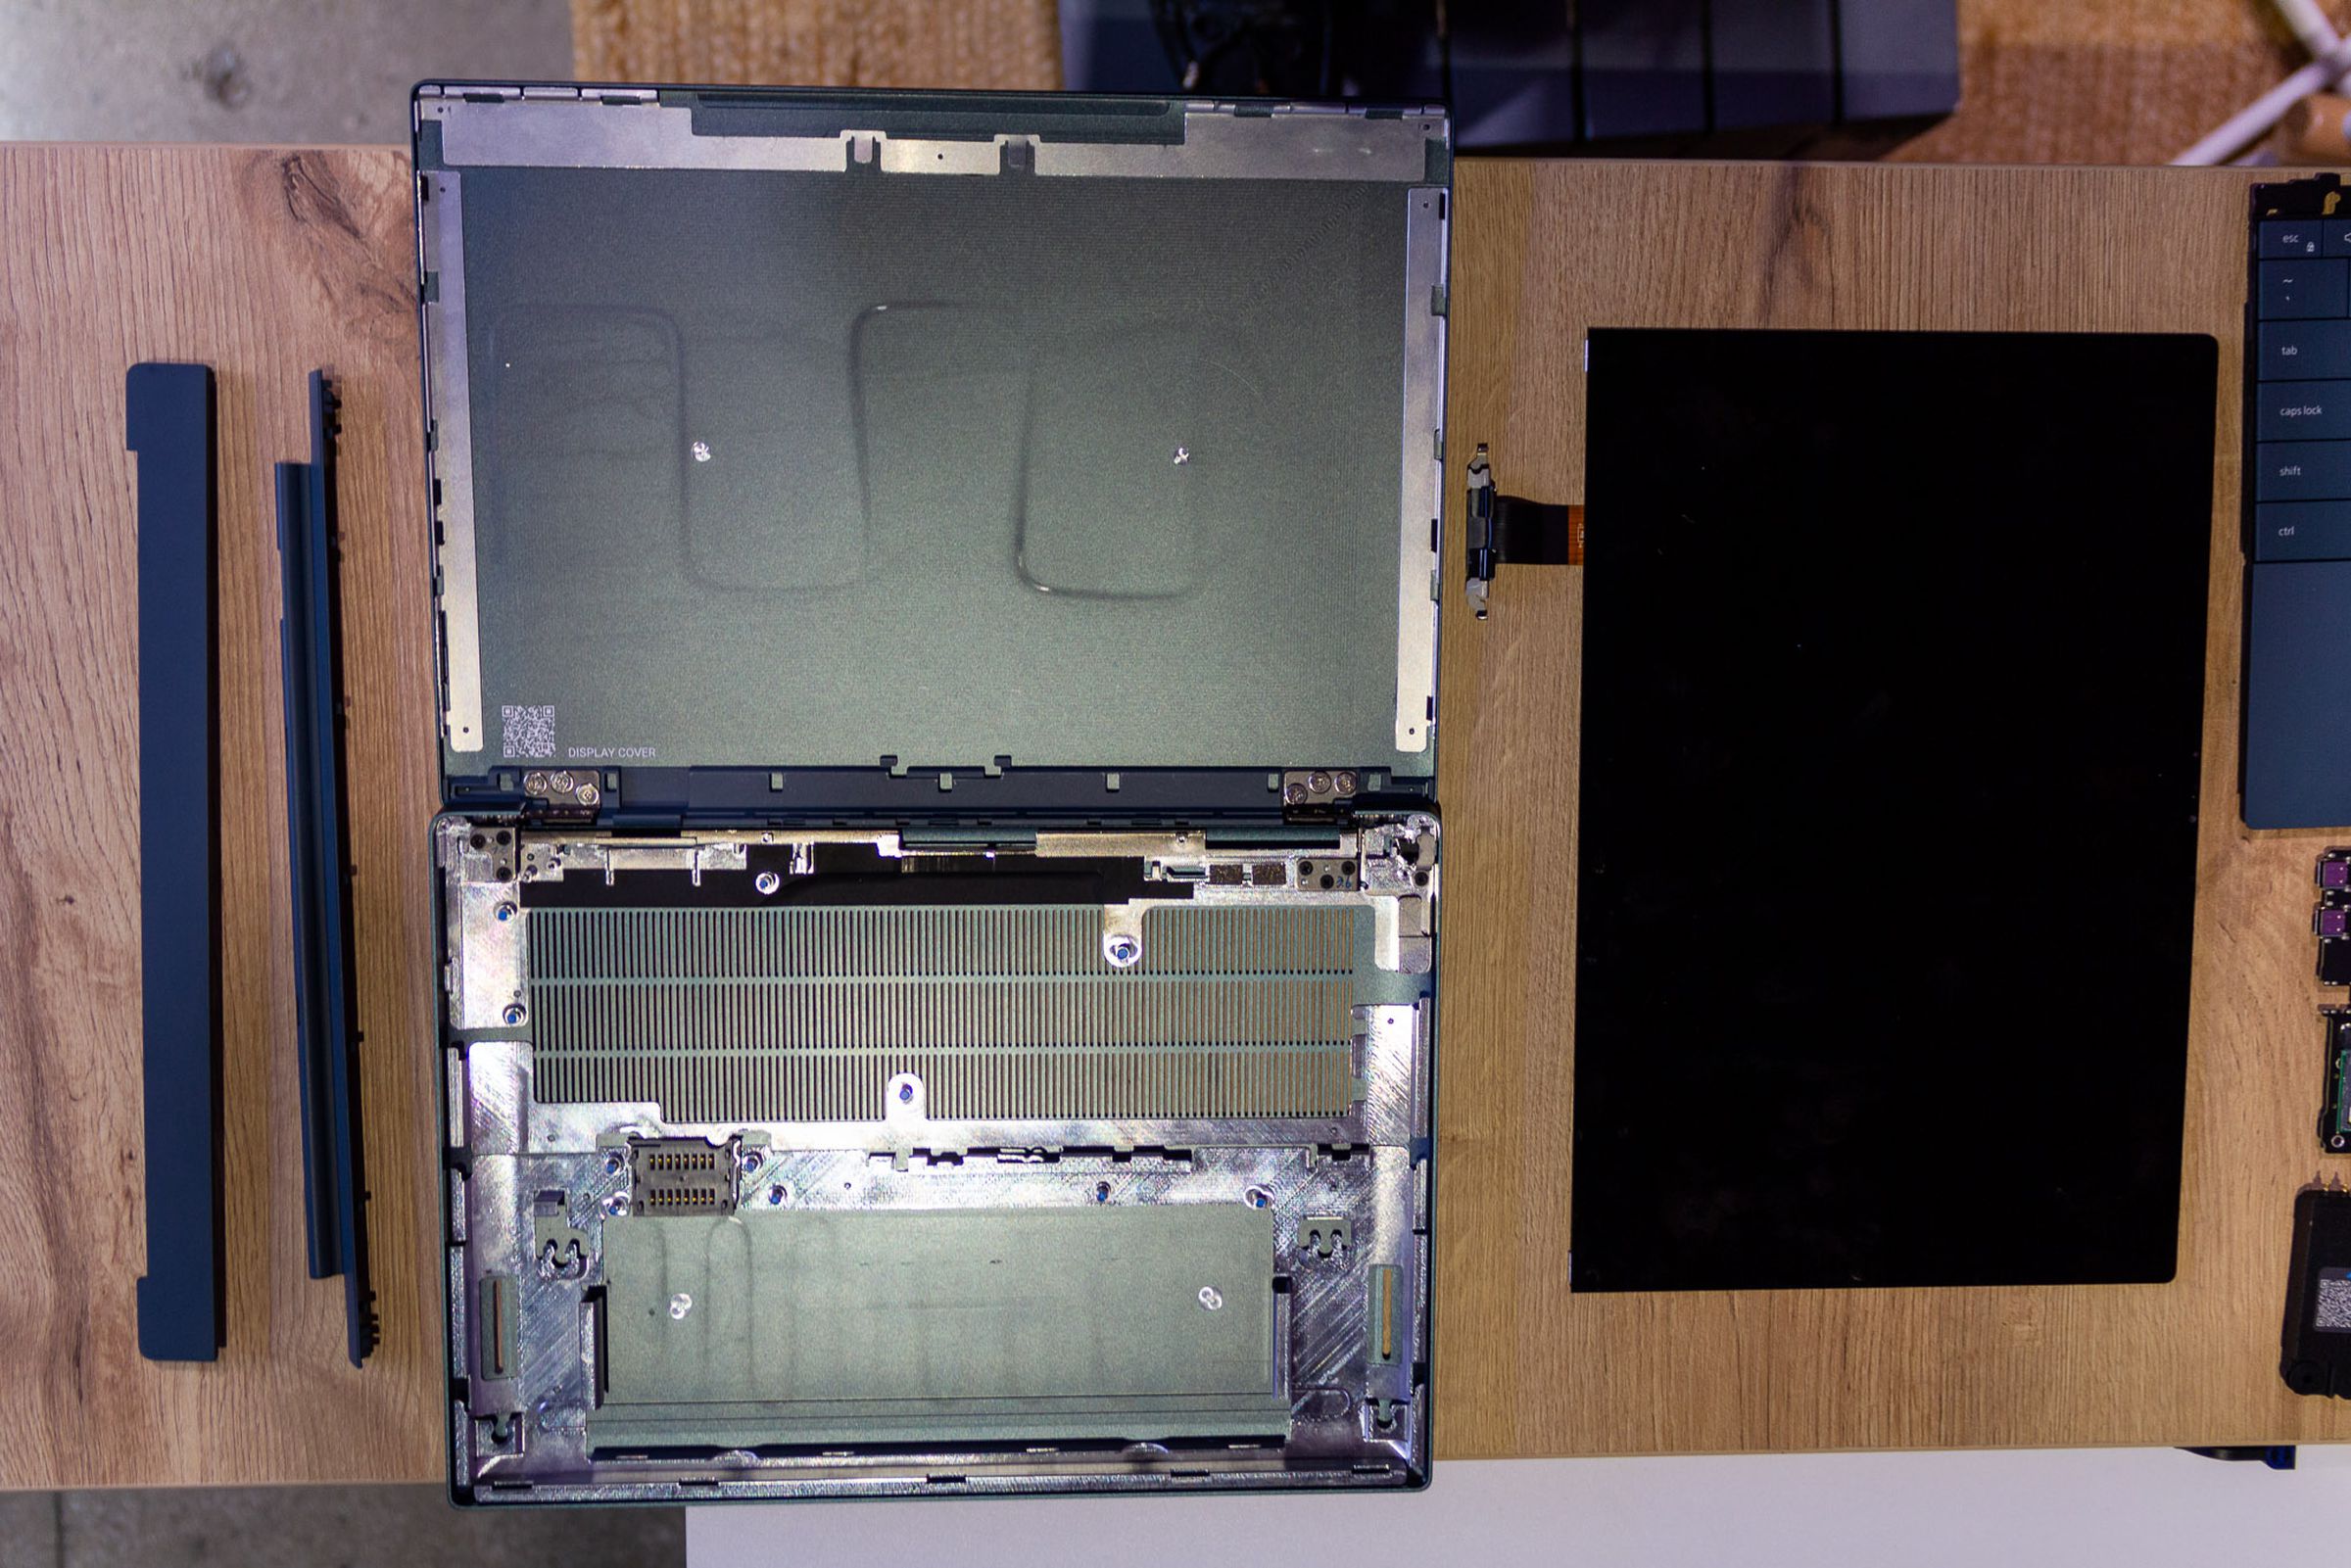 The Dell Concept Luna case disassembled.